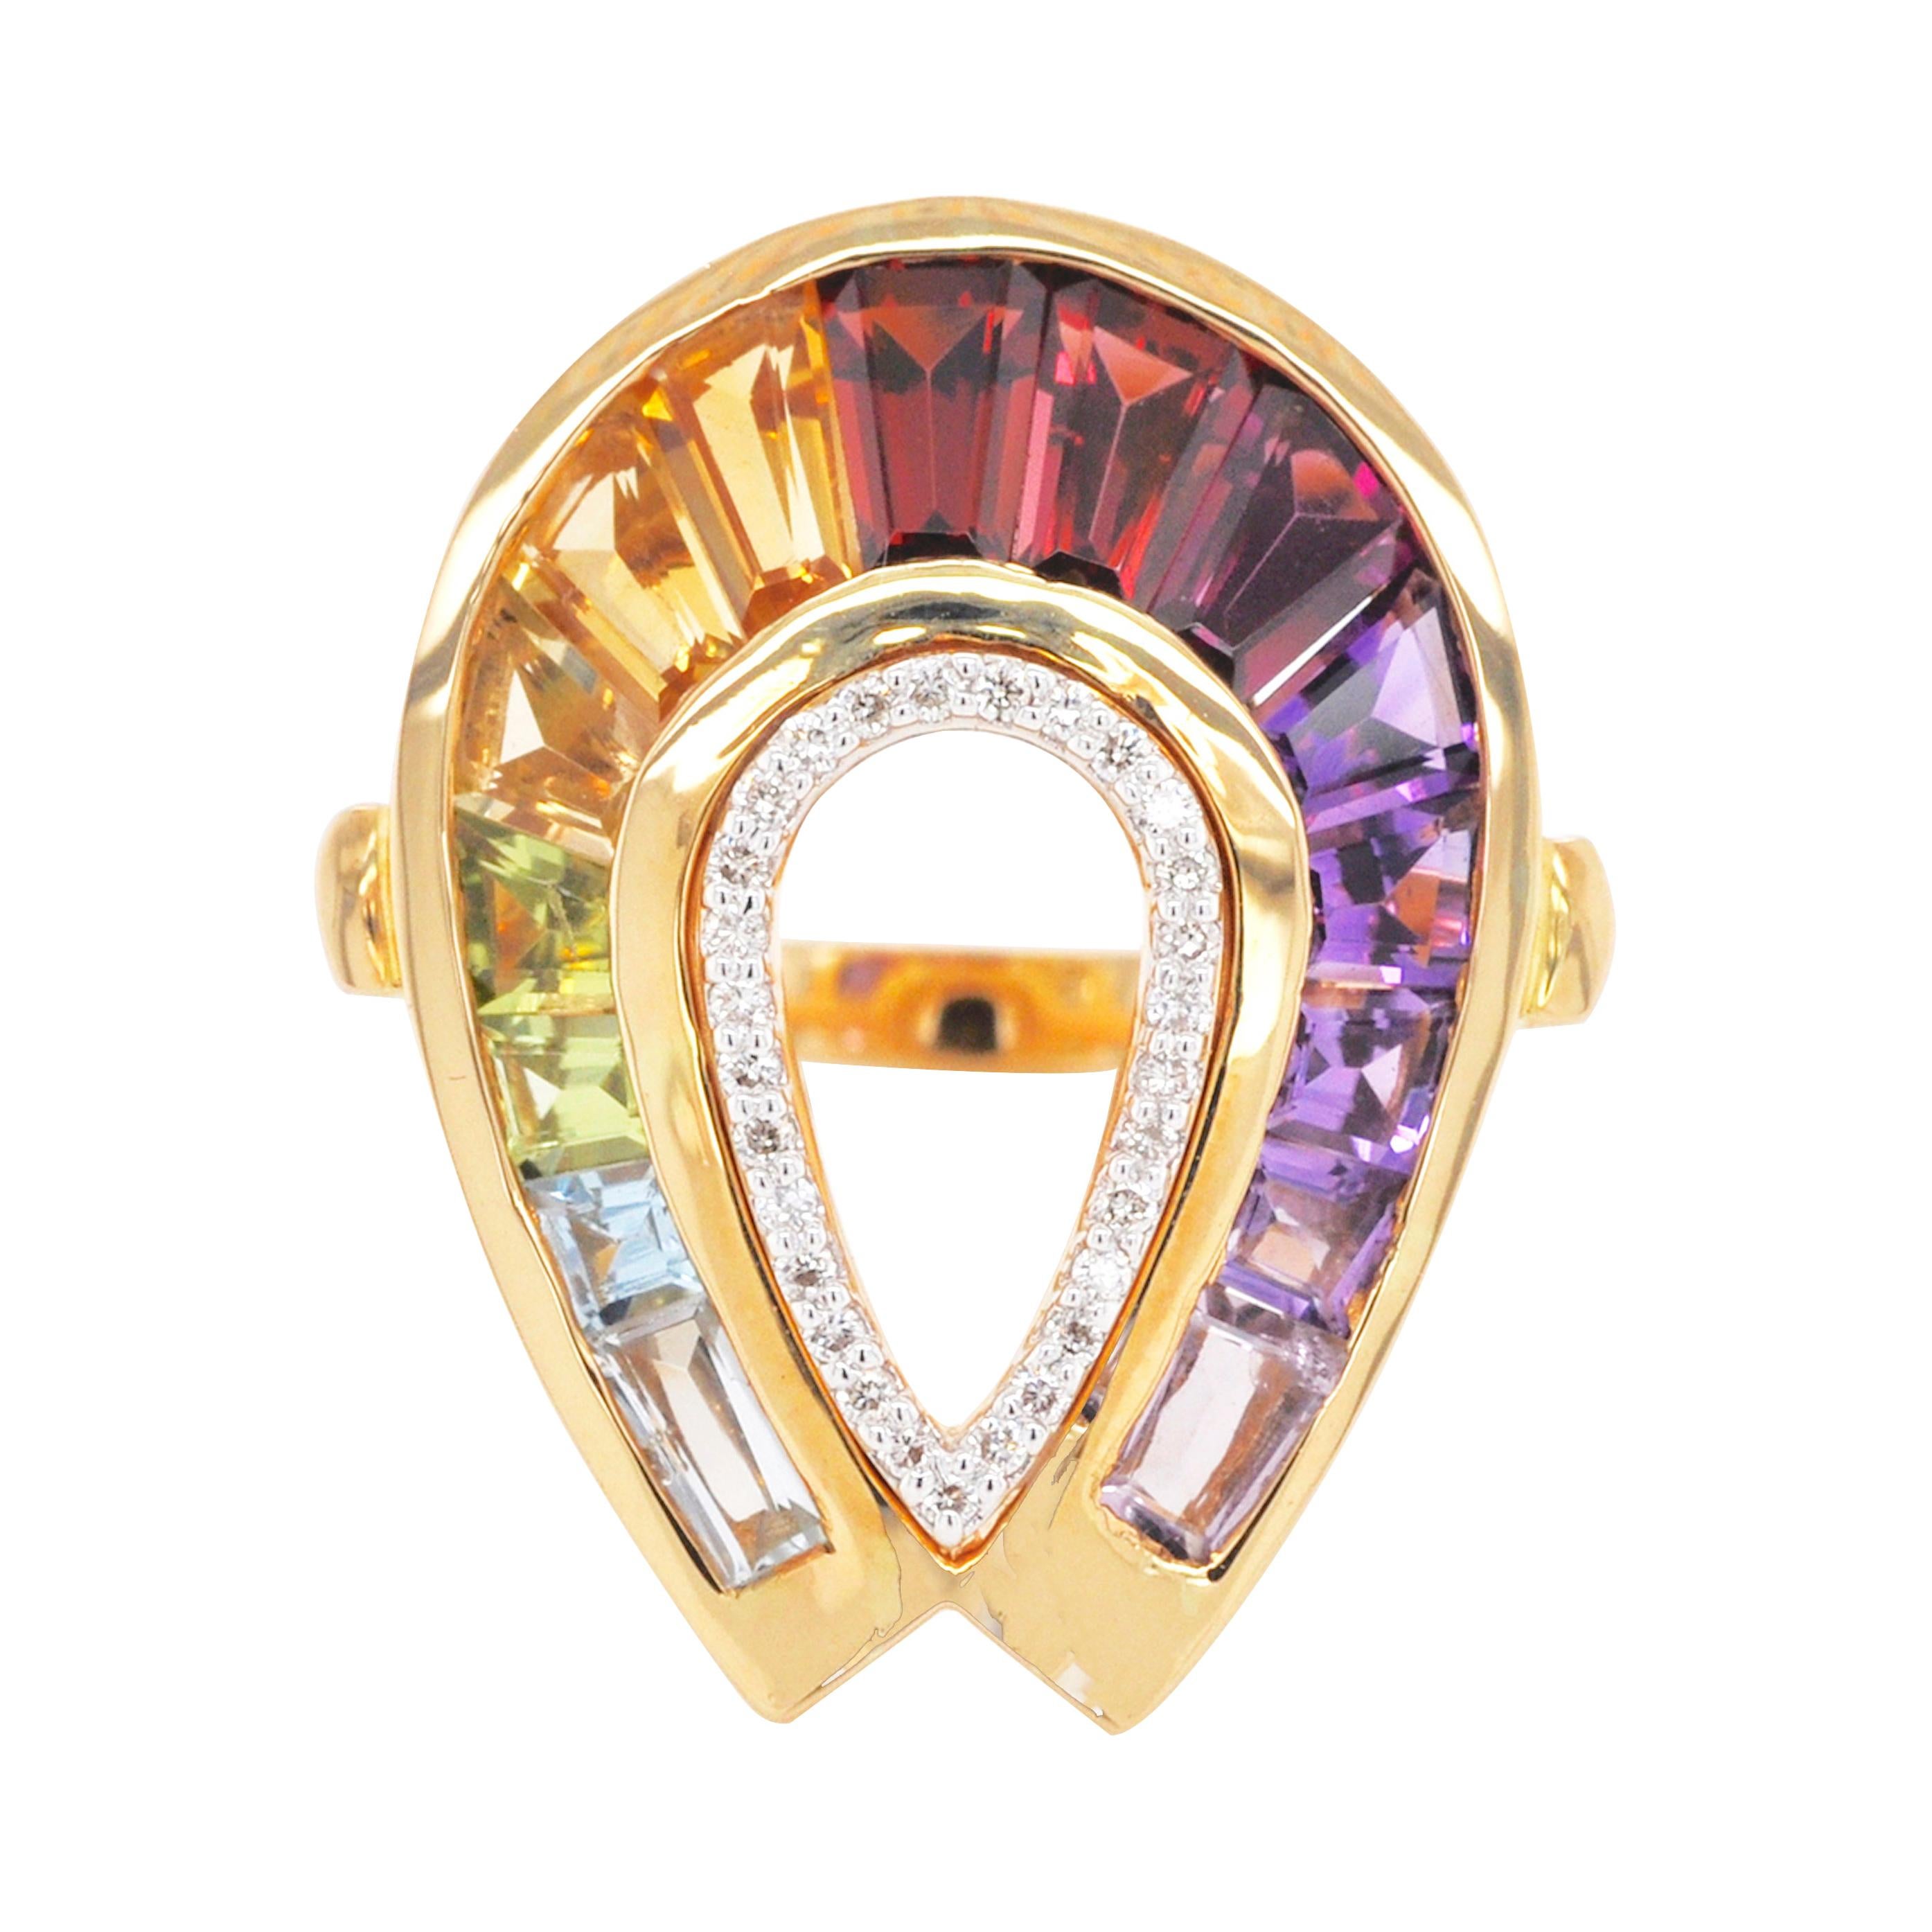 For Sale:  18 Karat Gold Channel Set Baguette Rainbow Gemstones Doorknocker Diamond Ring